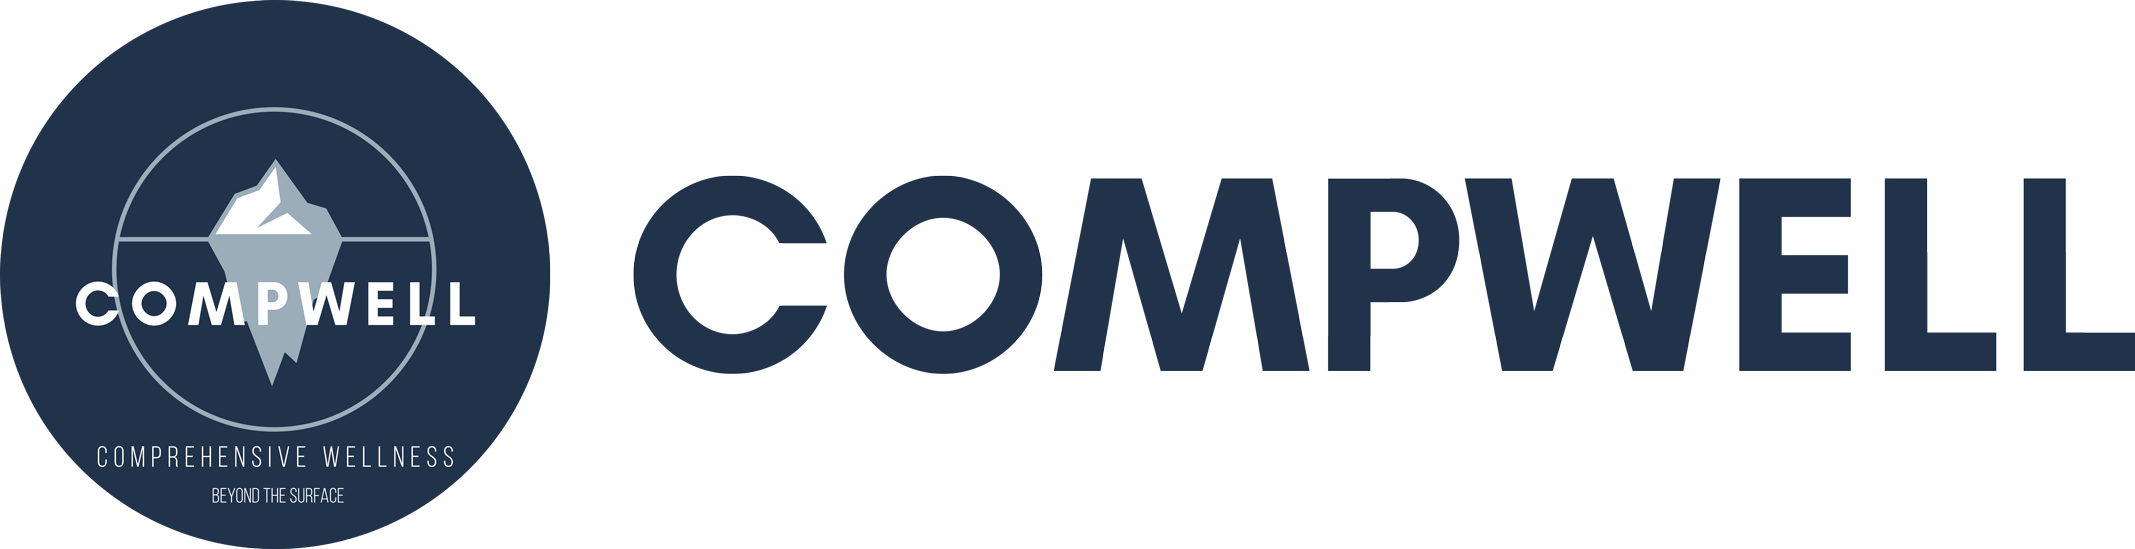 COMPWELL Logo